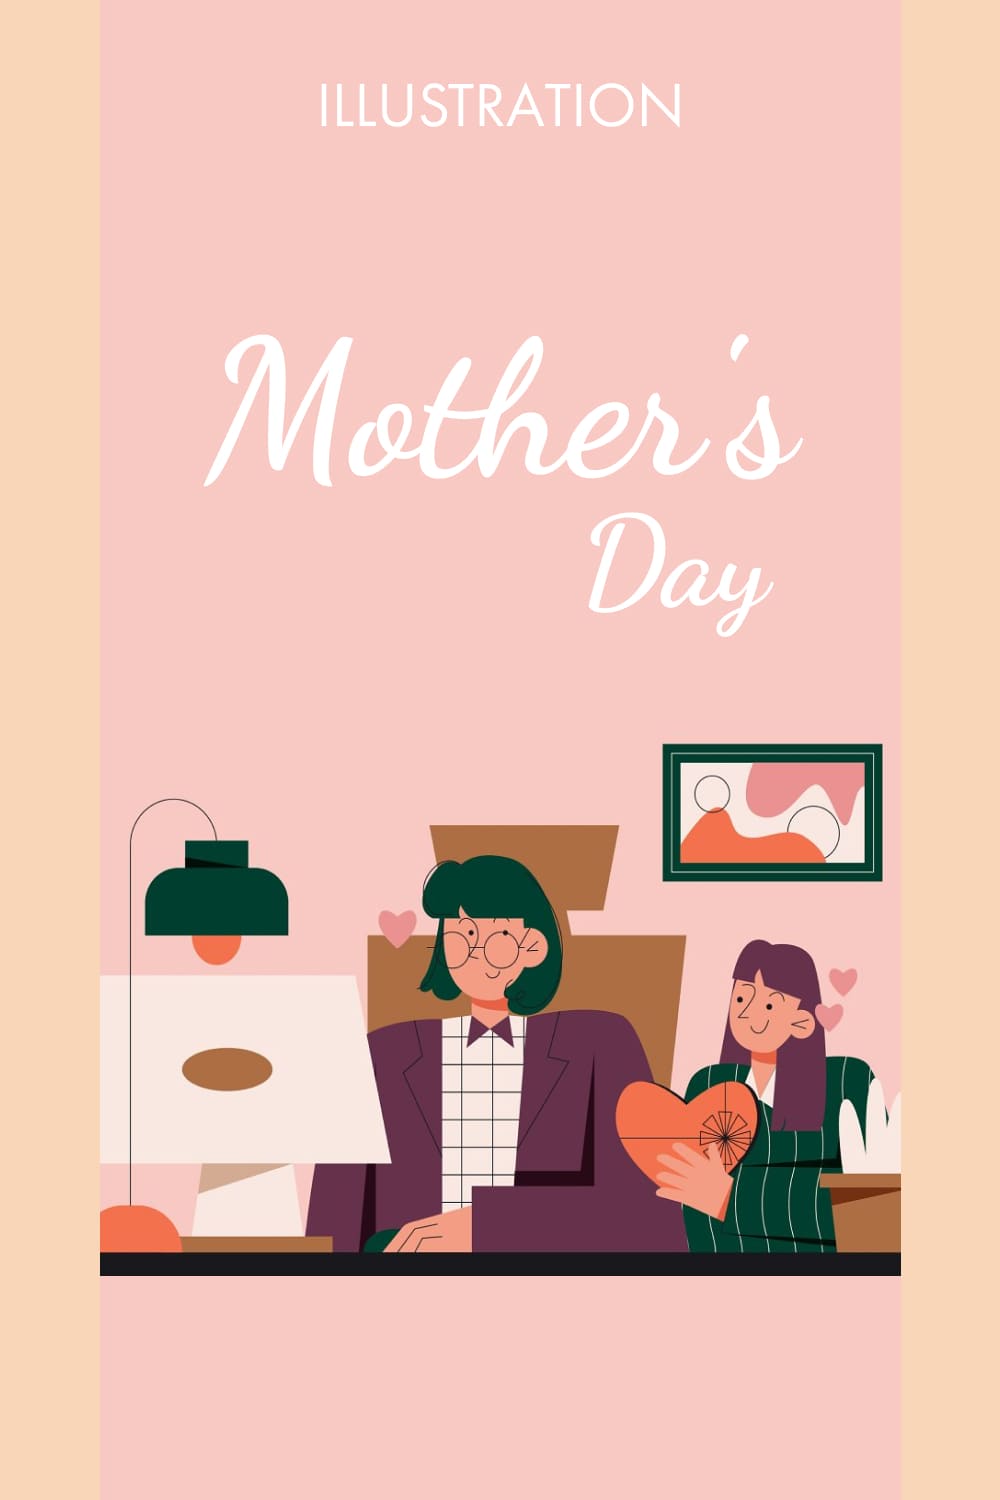 Mother's Day Illustration - Pinterest.